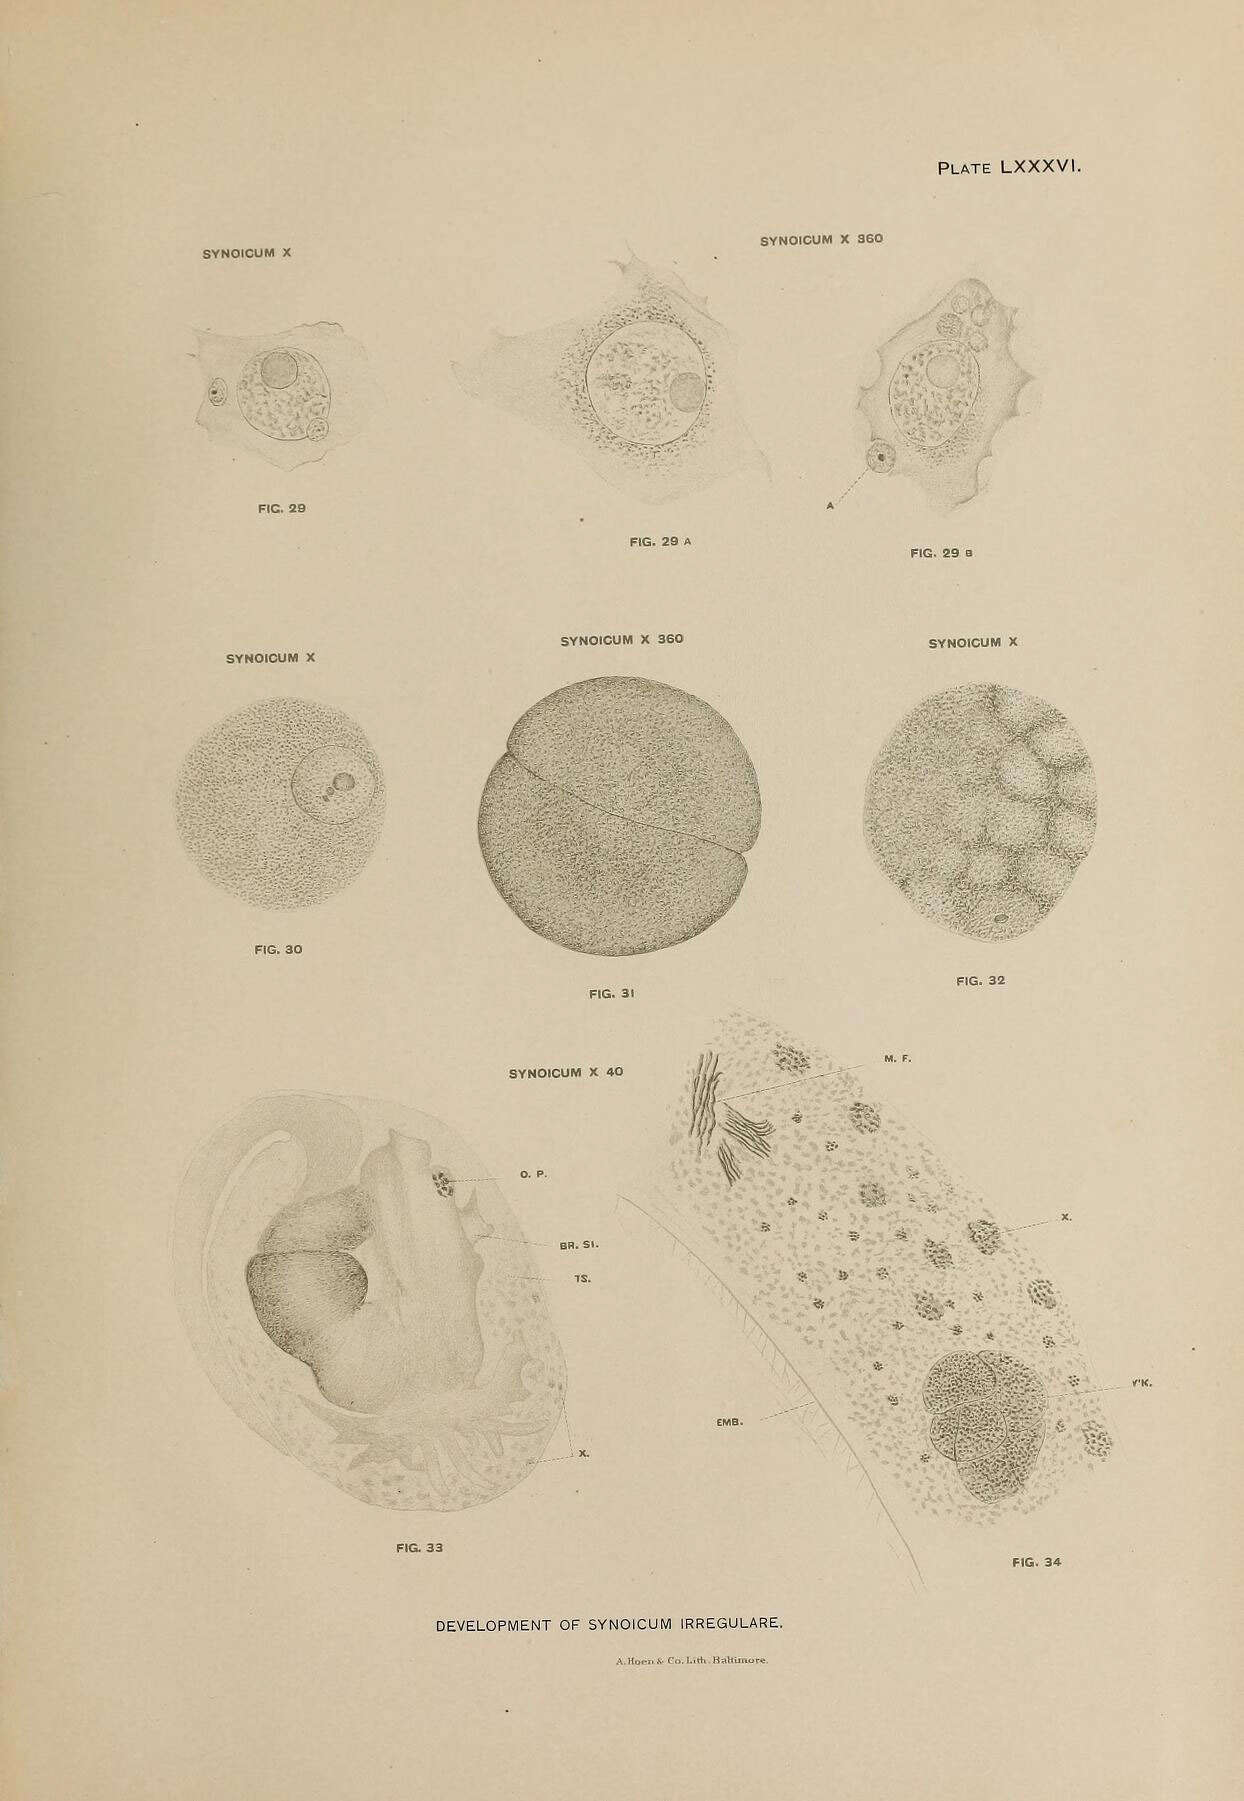 Image of Synoicum irregulare Ritter 1899